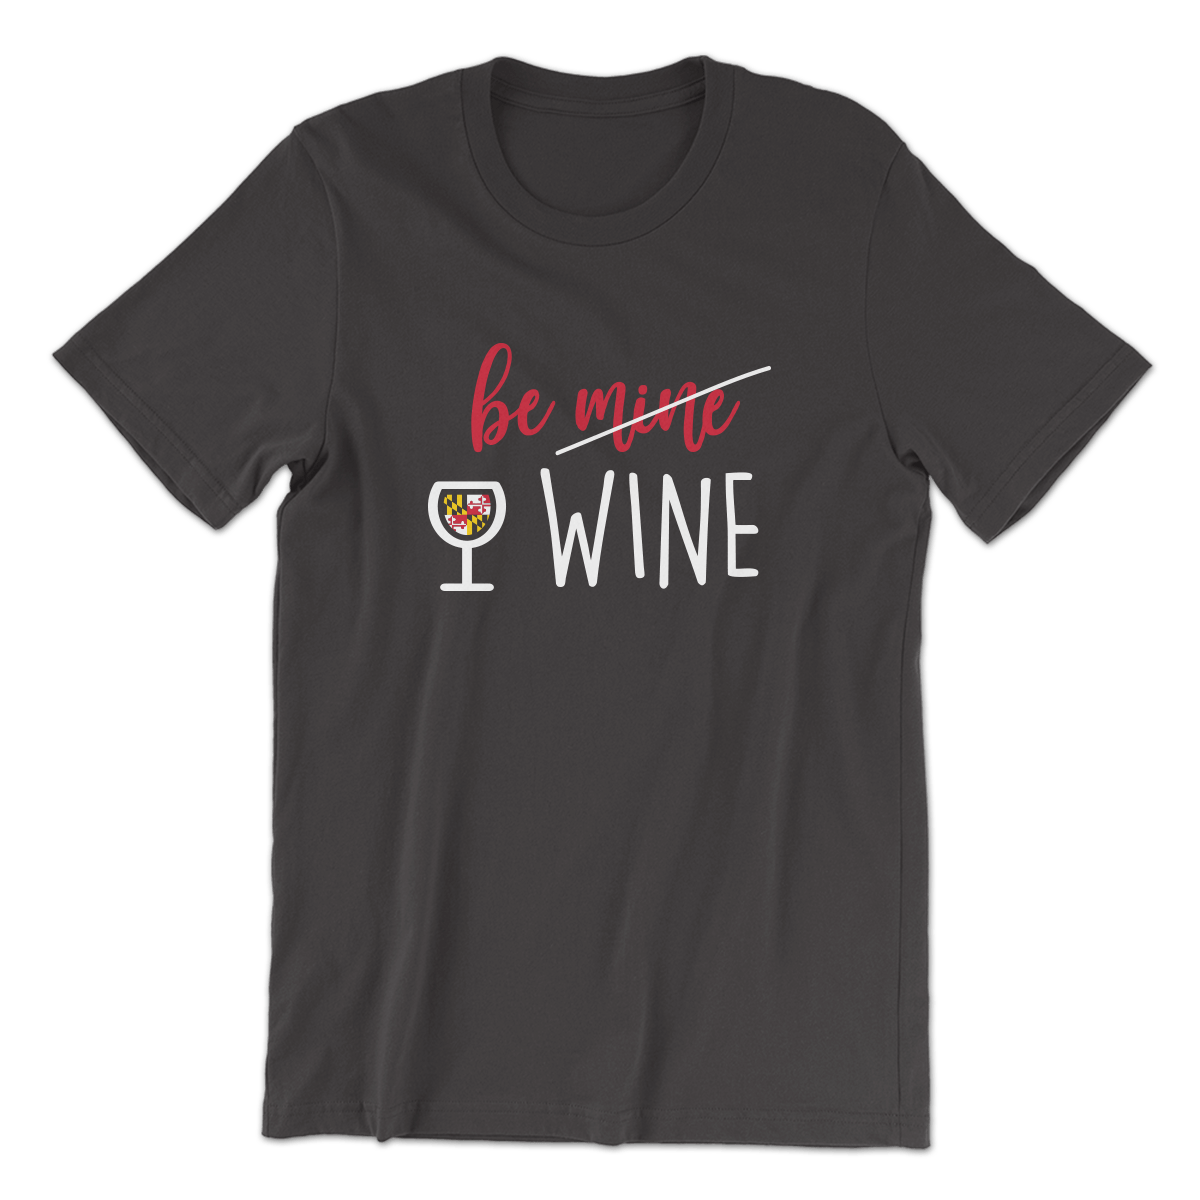 Be Wine (Dark Heather Grey) / Shirt - Route One Apparel